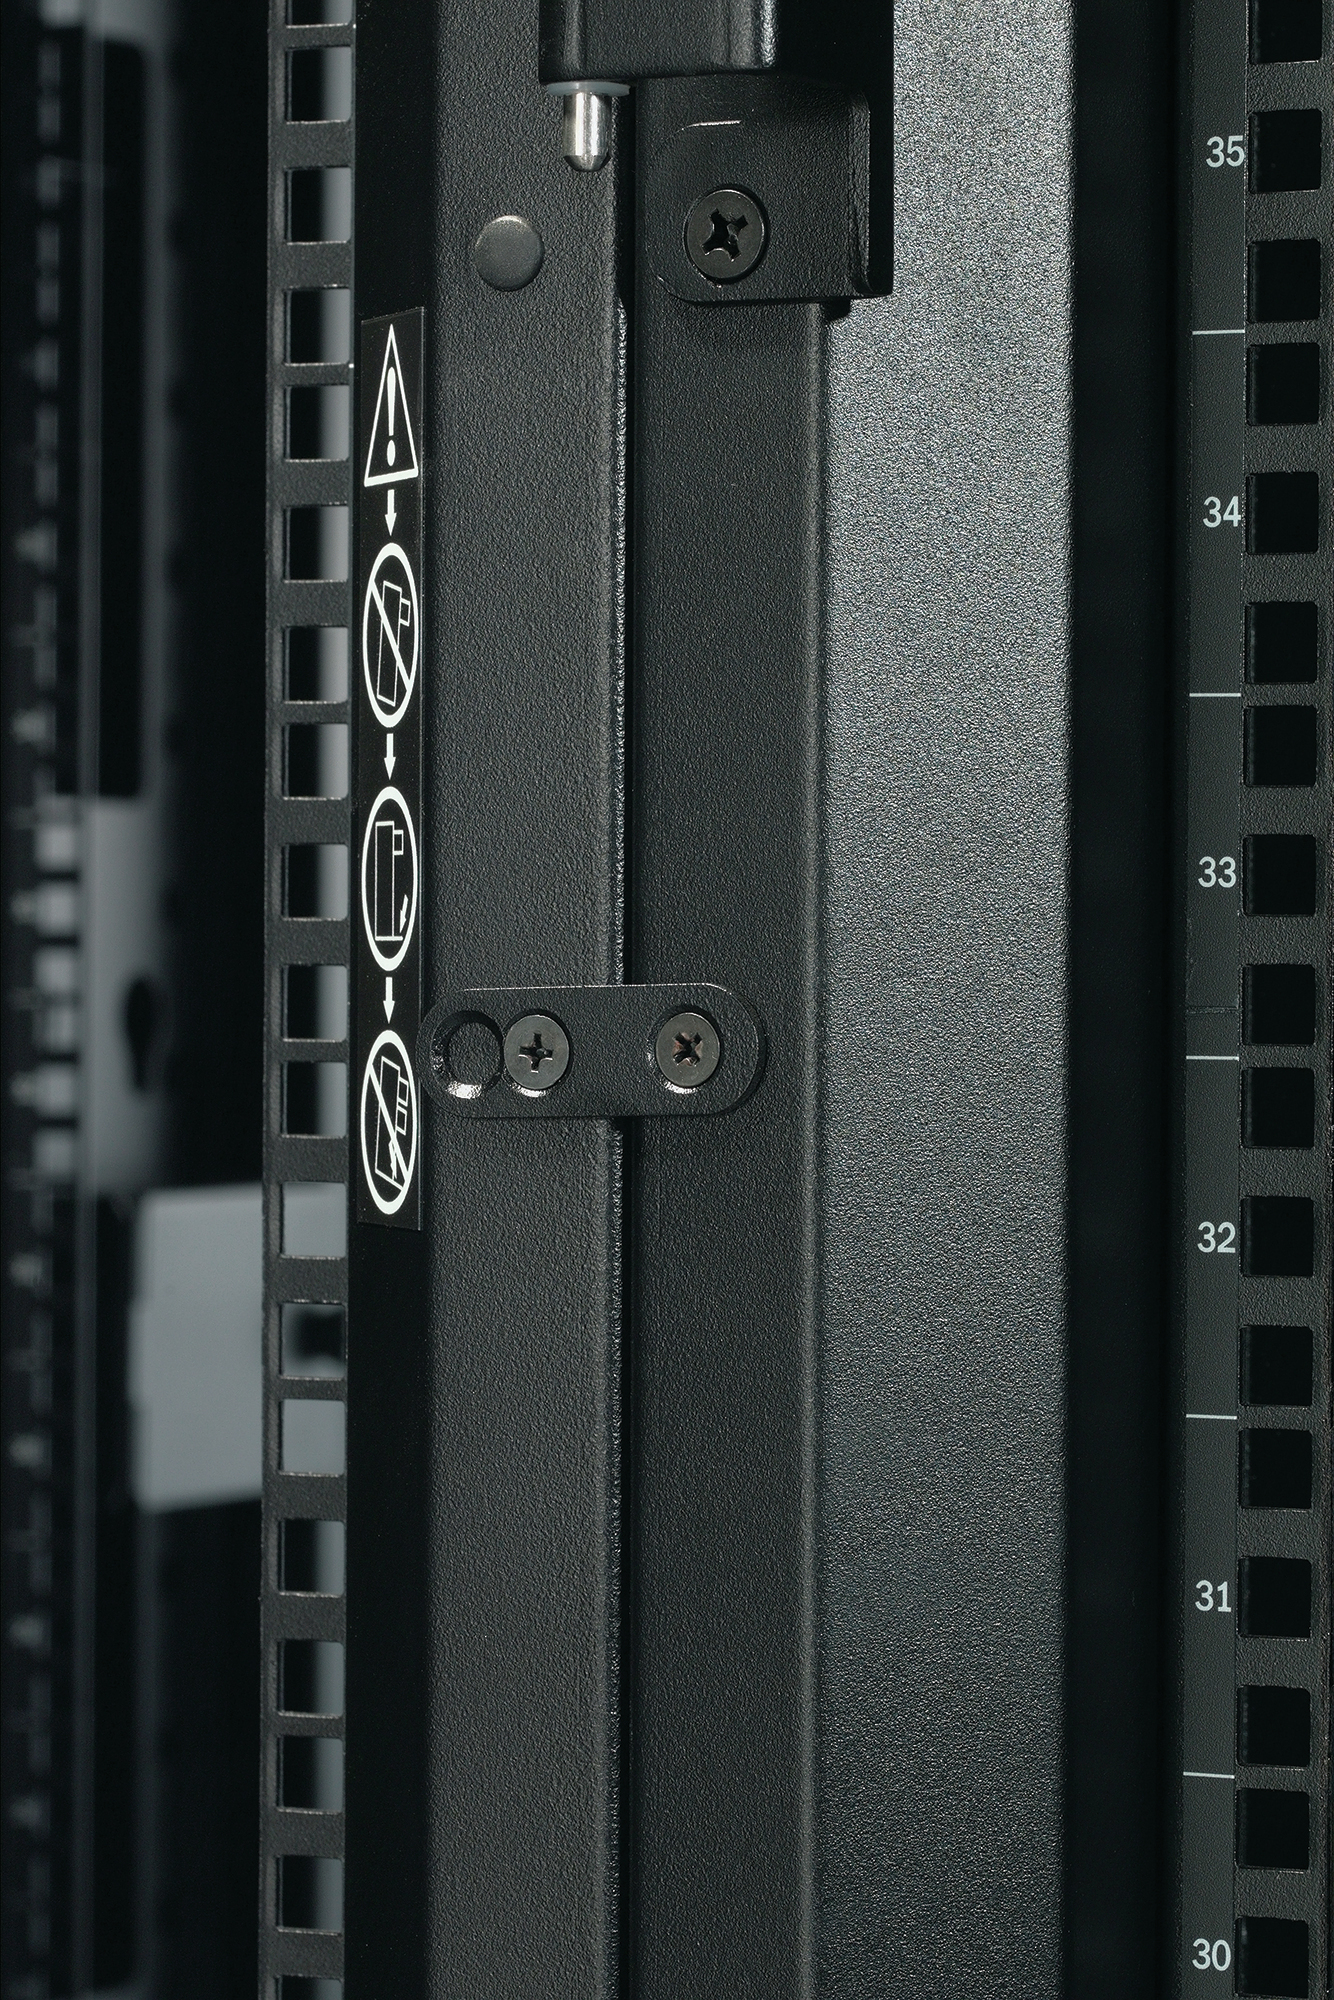 APC NetShelter SX, 42 HE Server Rack-Gehäuse